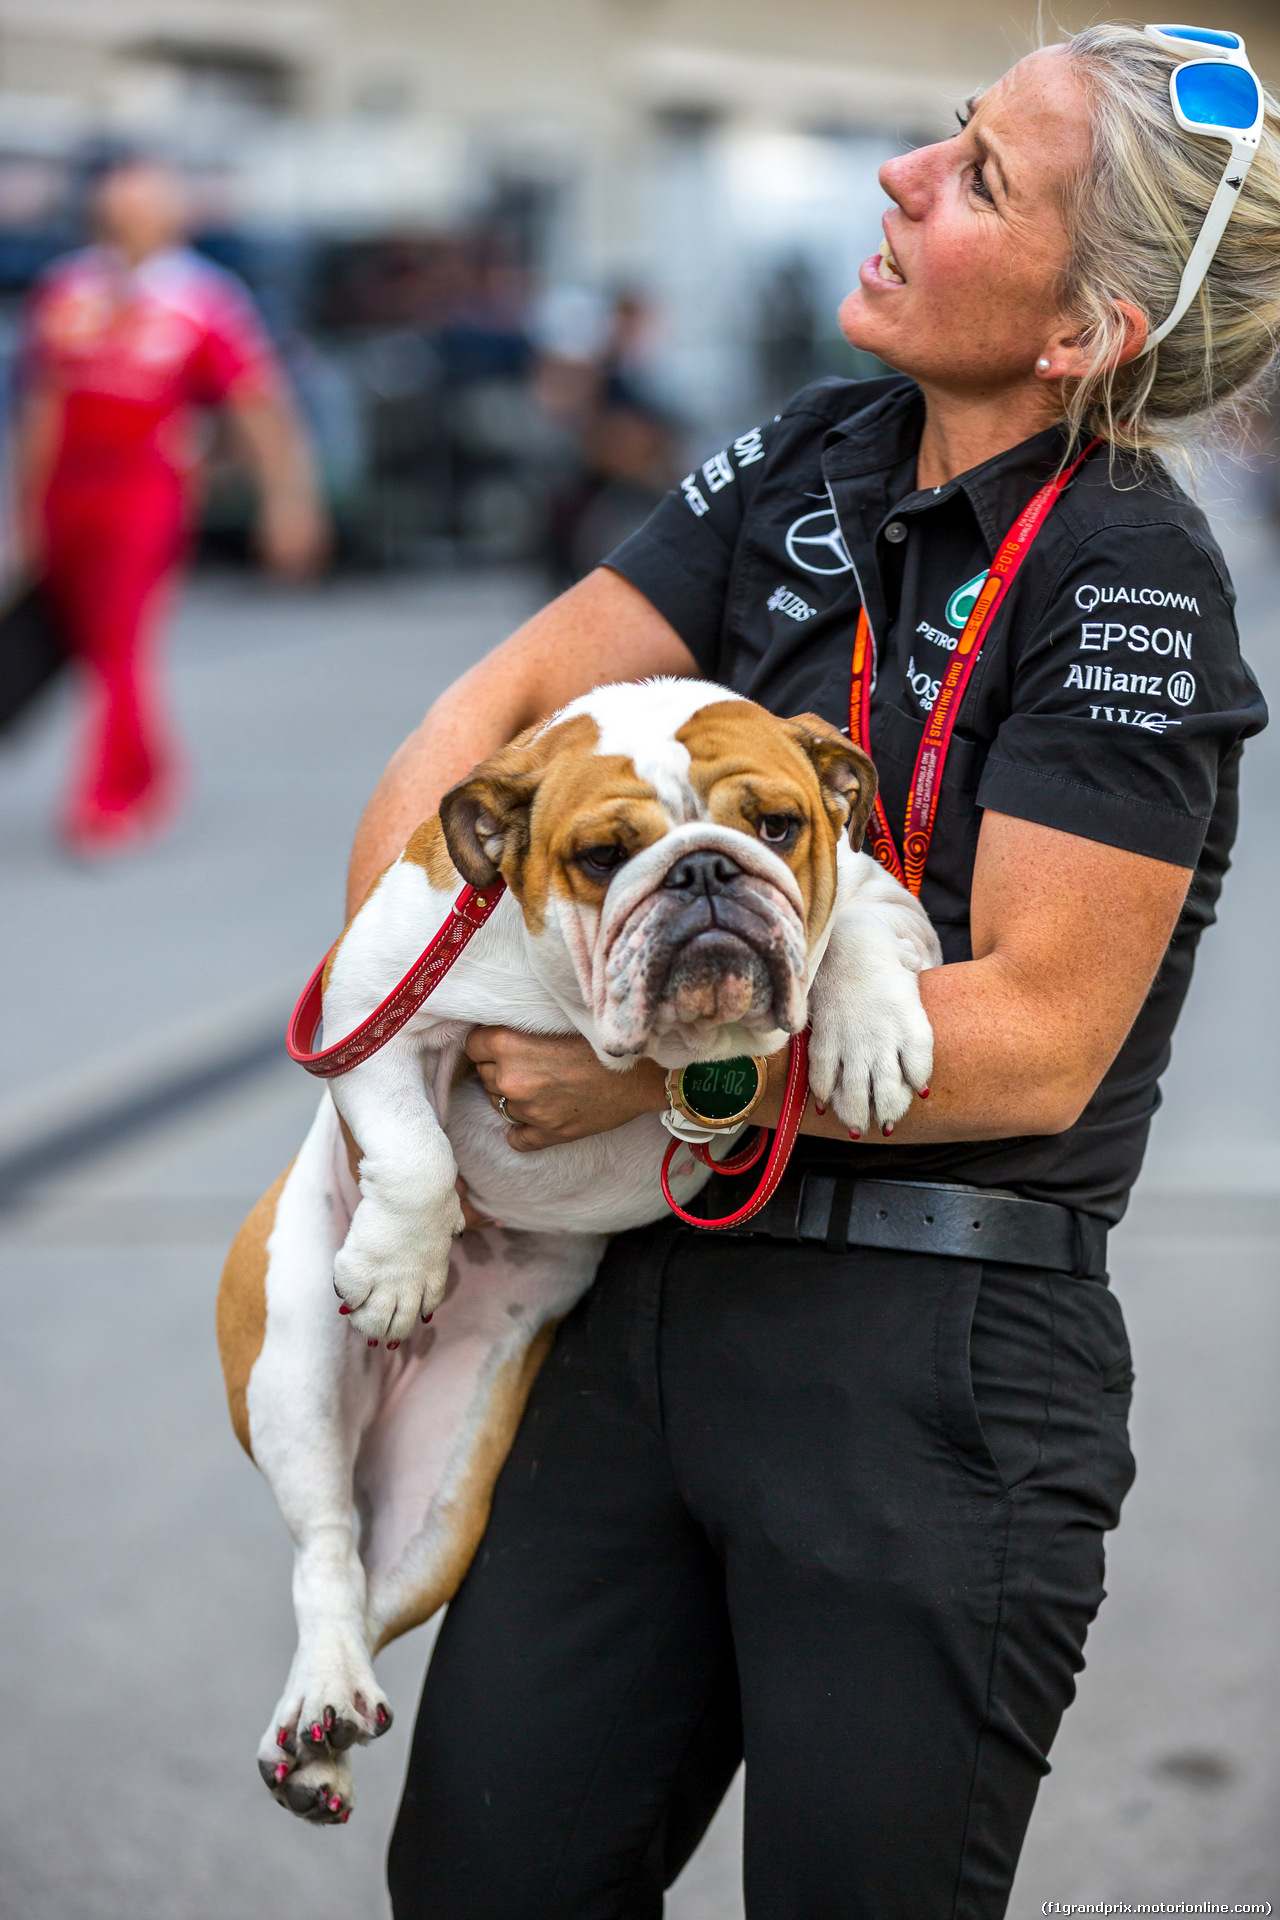 GP USA, 20.10.2016 - The dog of Lewis Hamilton (GBR)